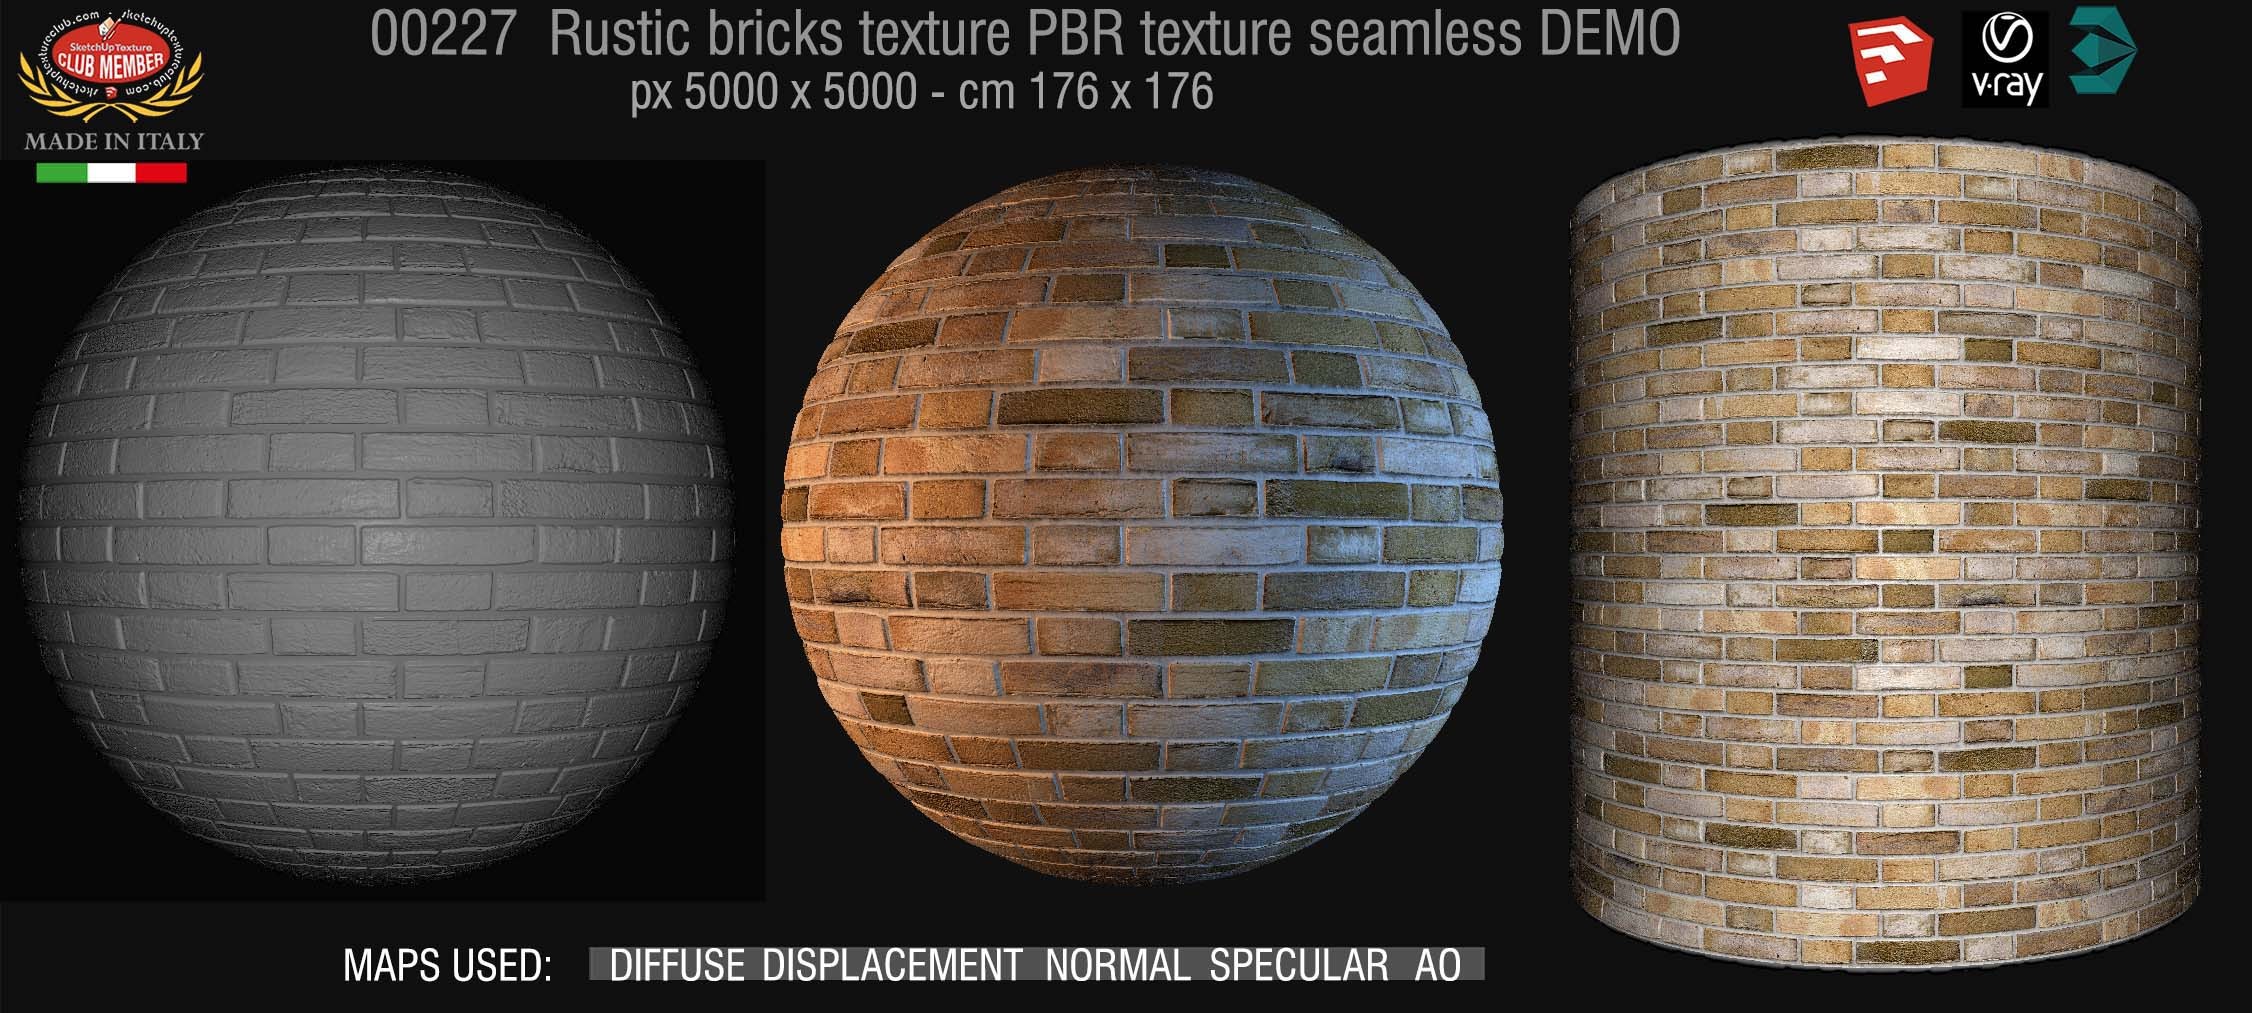 00227 rustic bricks PBR texture seamless DEMO